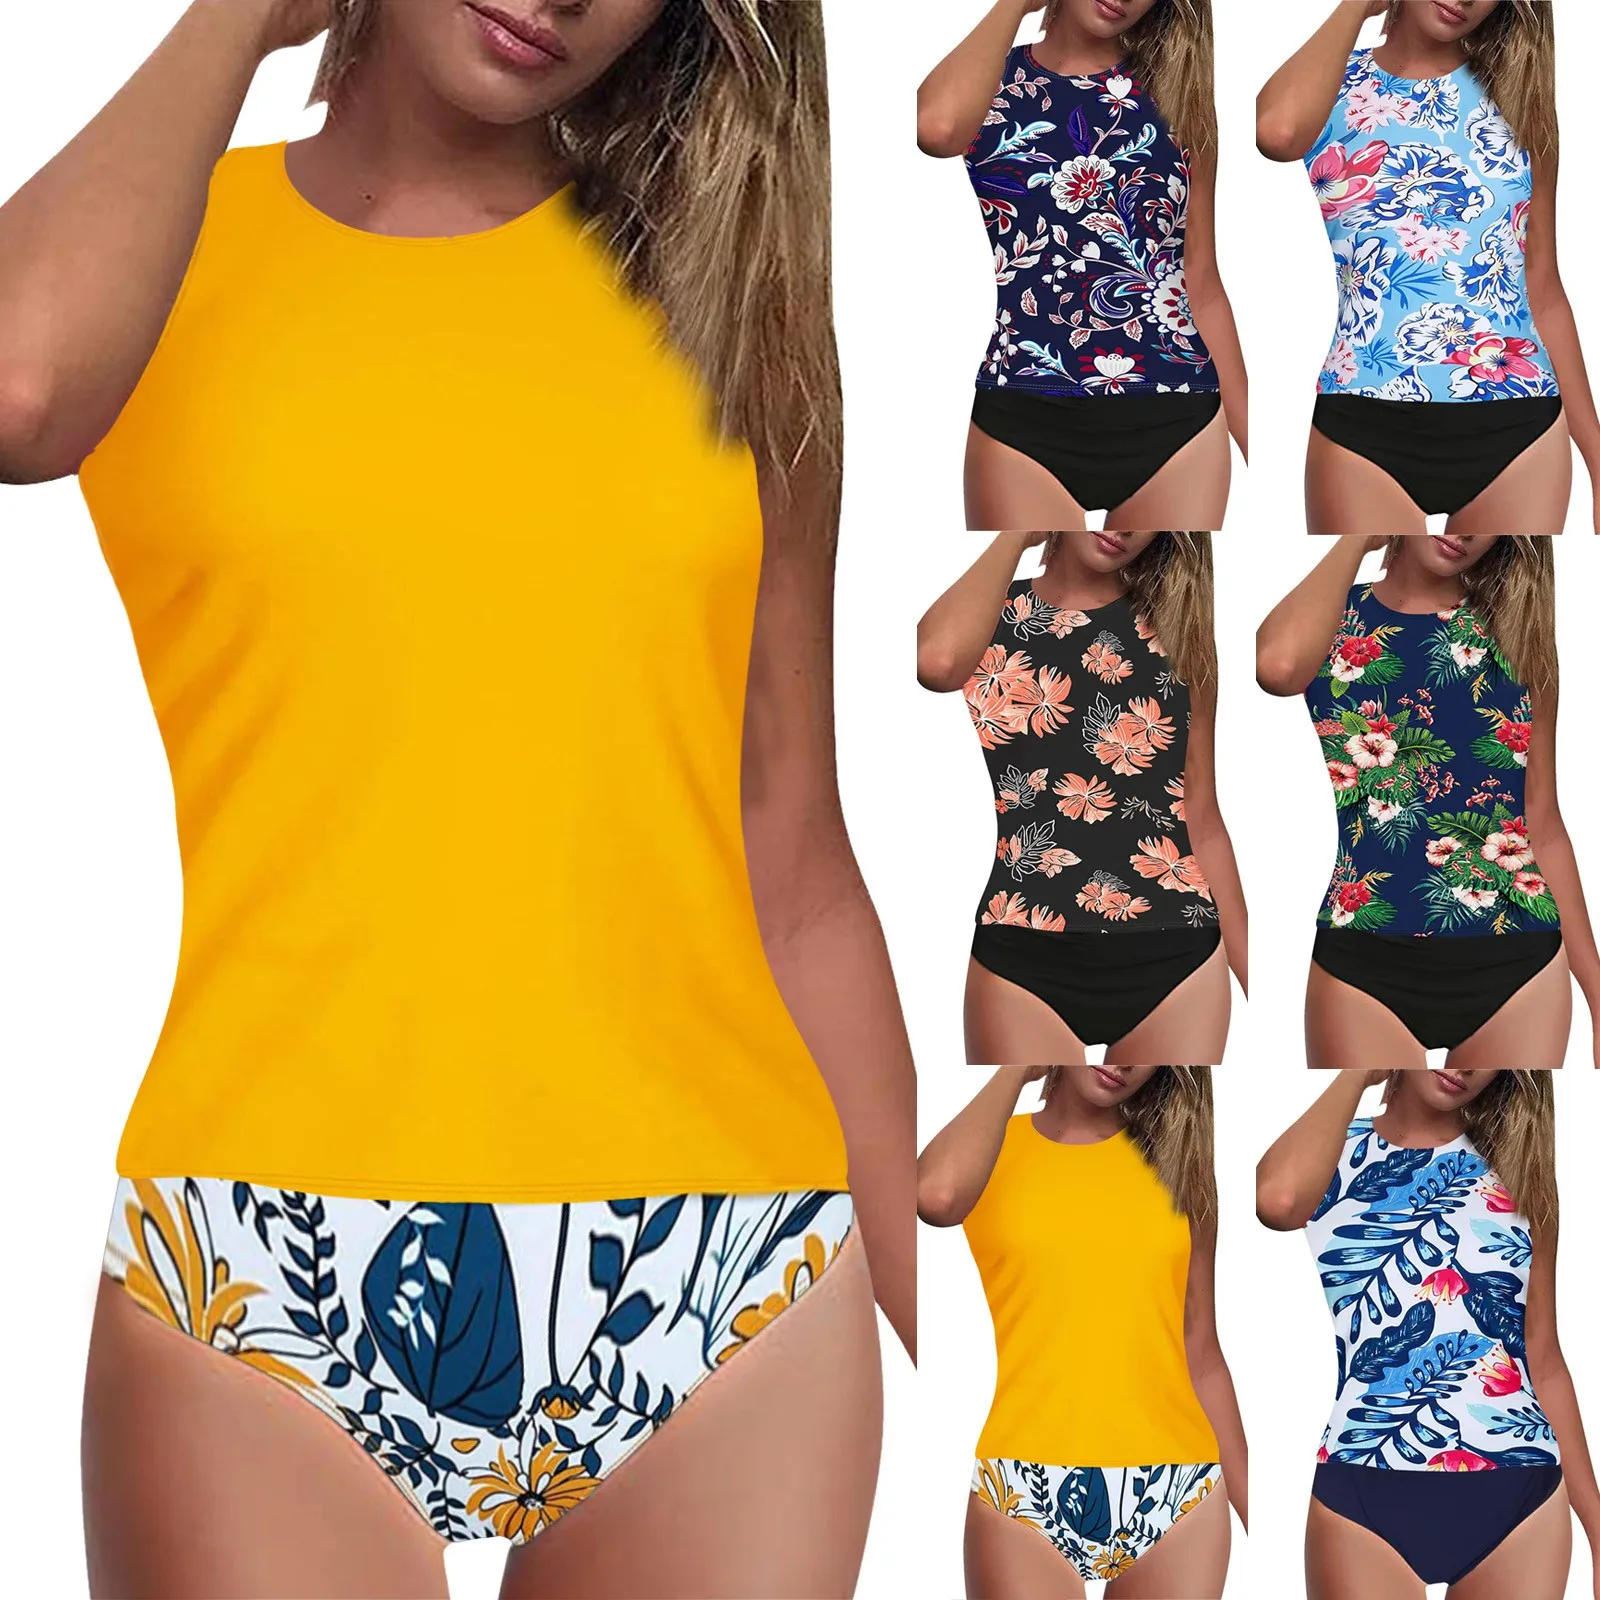 

Women's Swimming Suit 2021 Black Tankini High Waist High Neck Halter Tummy Control Two Piece Swimsuit Tank Top Print Swimwear